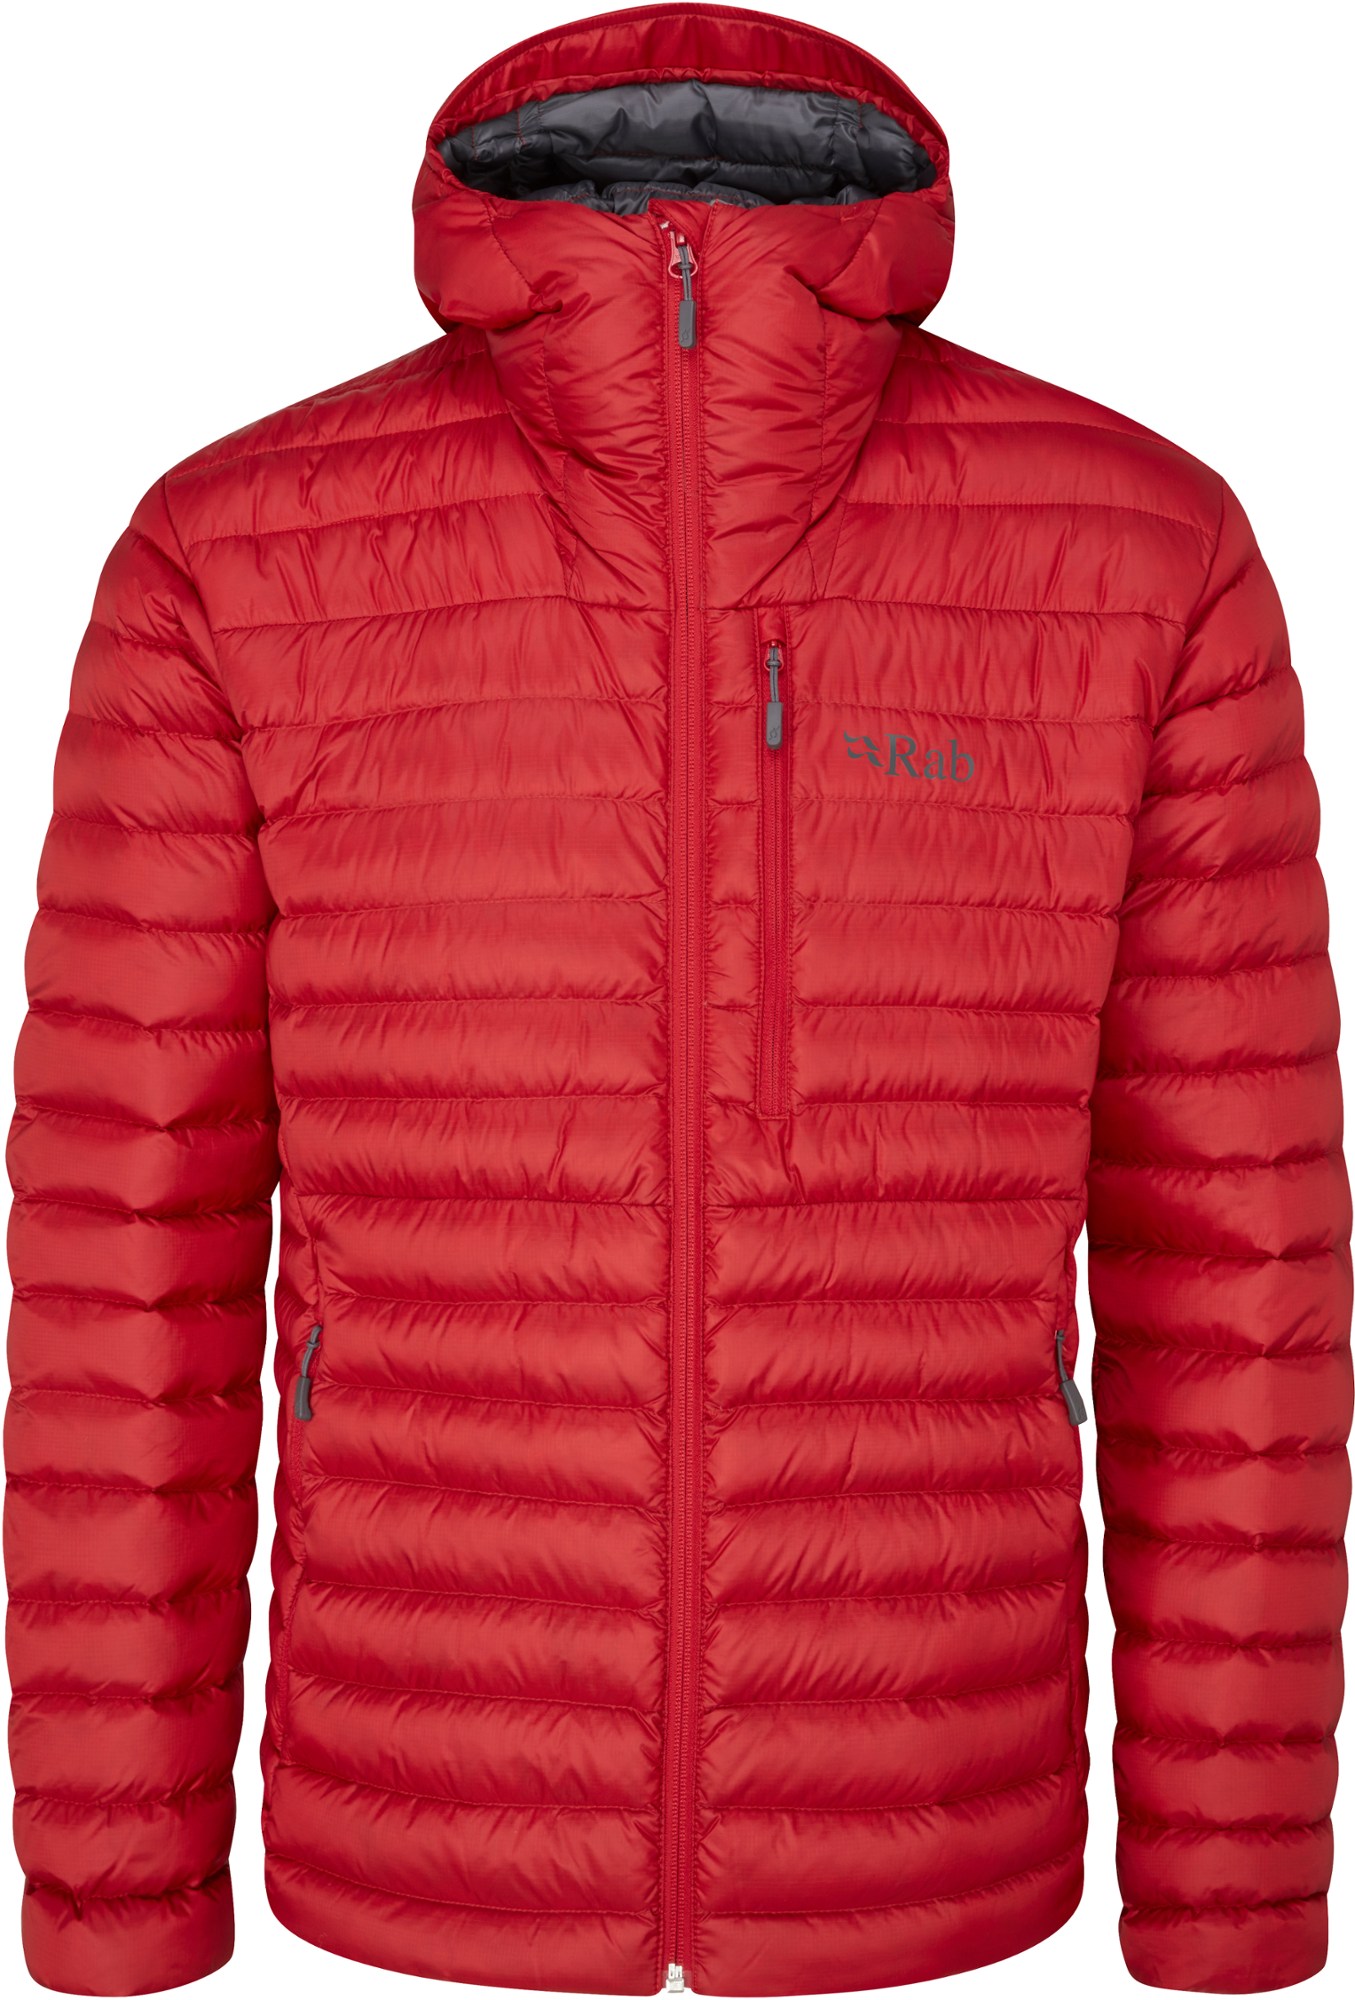 Пуховик Microlight Alpine - мужской Rab, красный куртка rab microlight alpine down красный